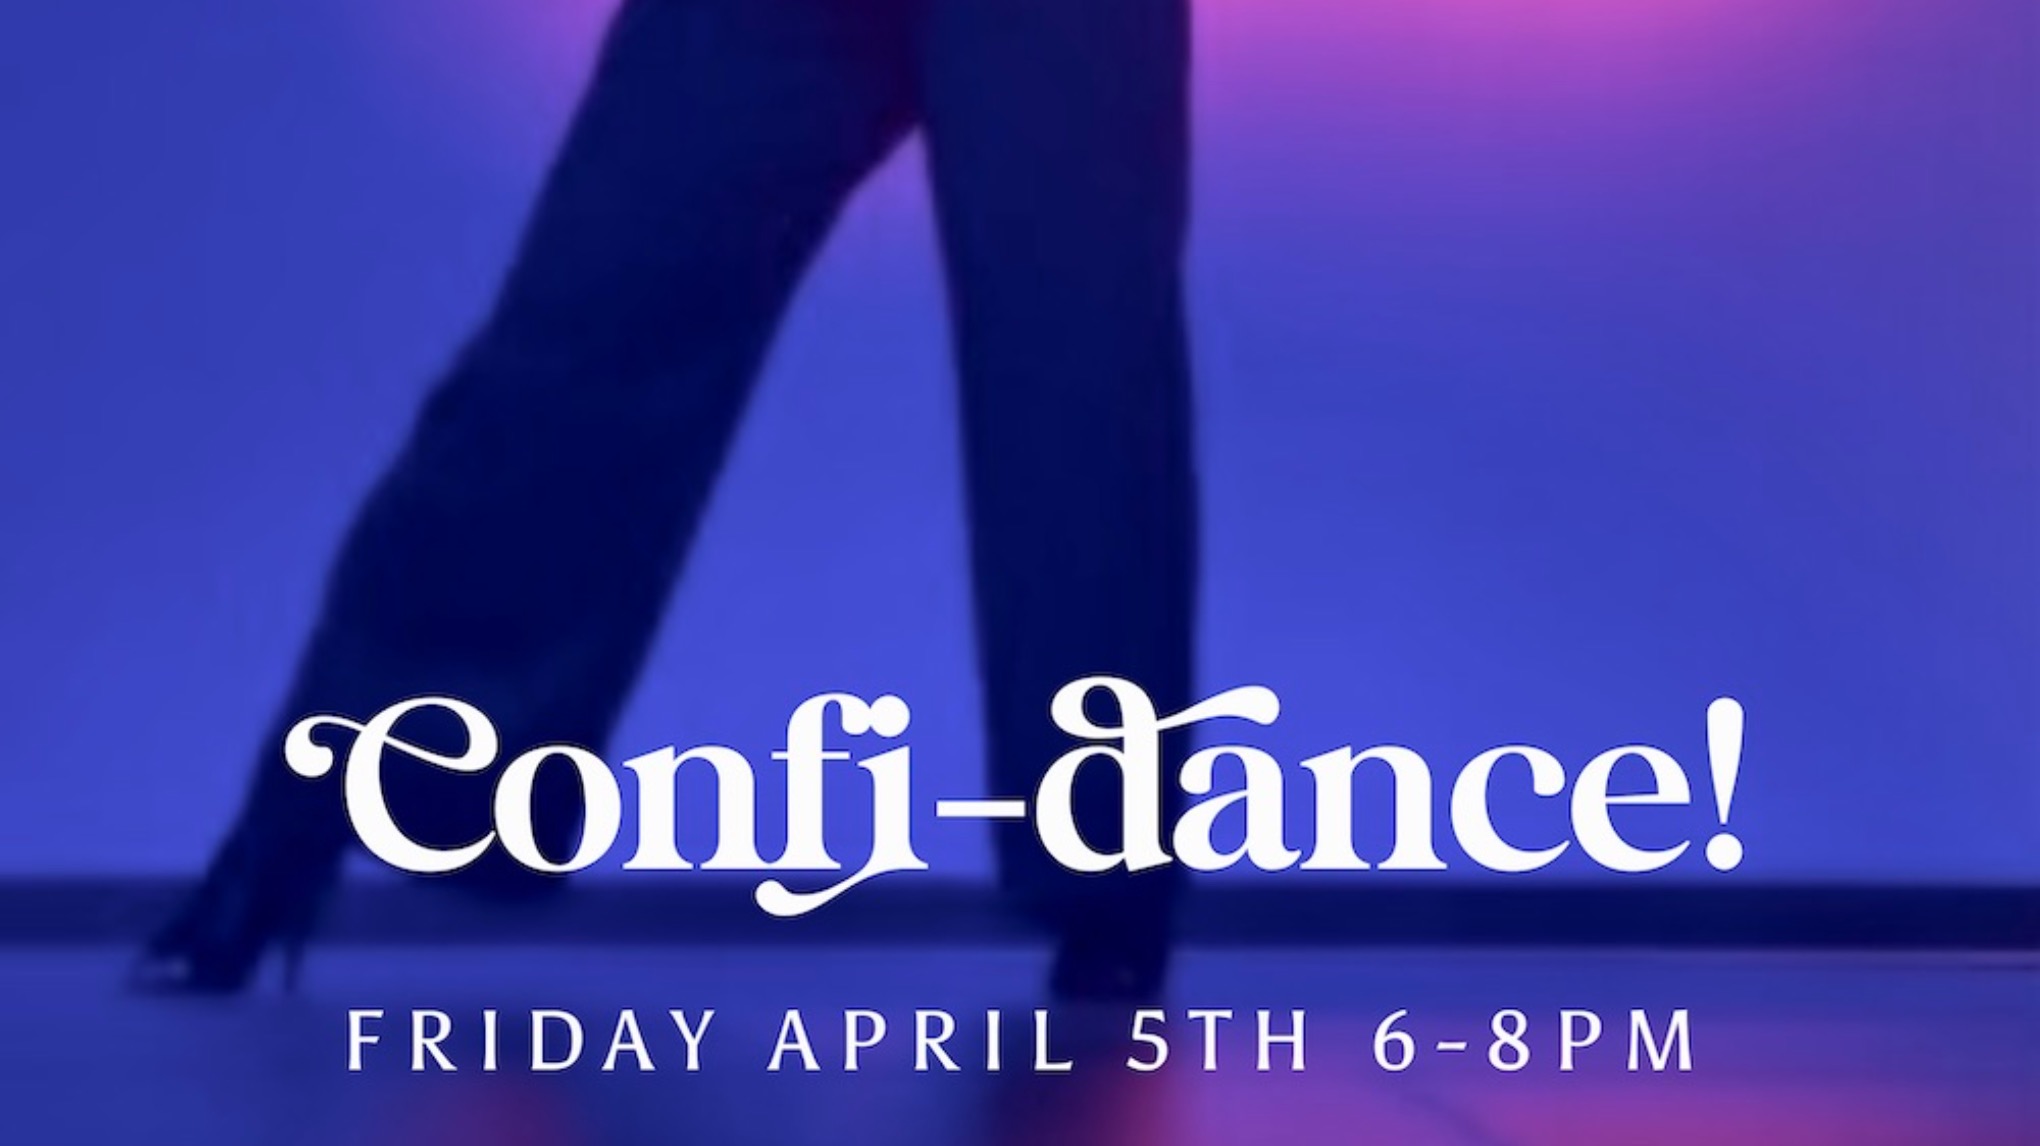 Confi-dance!